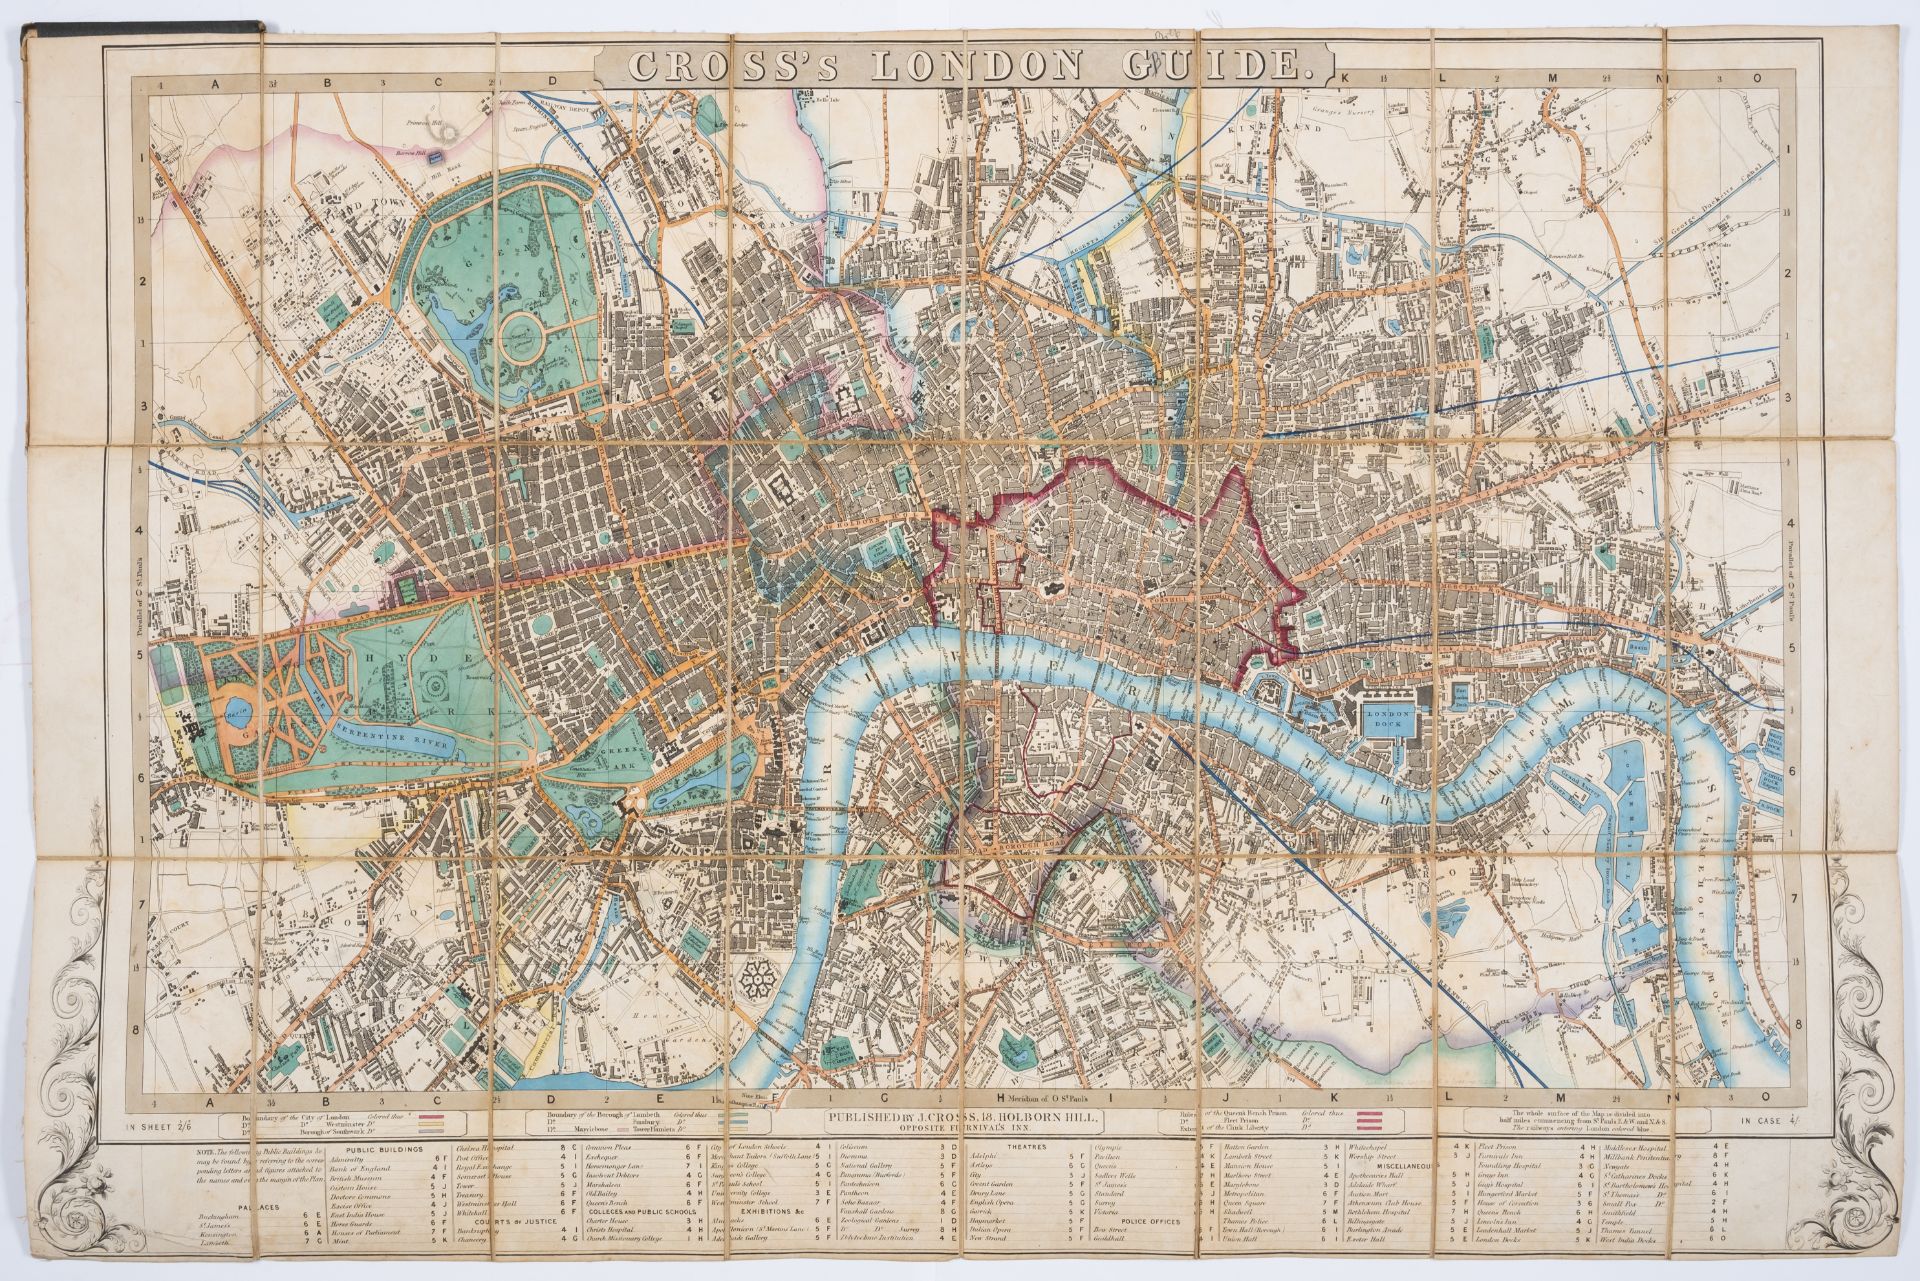 London.- Cross (Joseph) Cross's London Guide, engraved map, [1844]